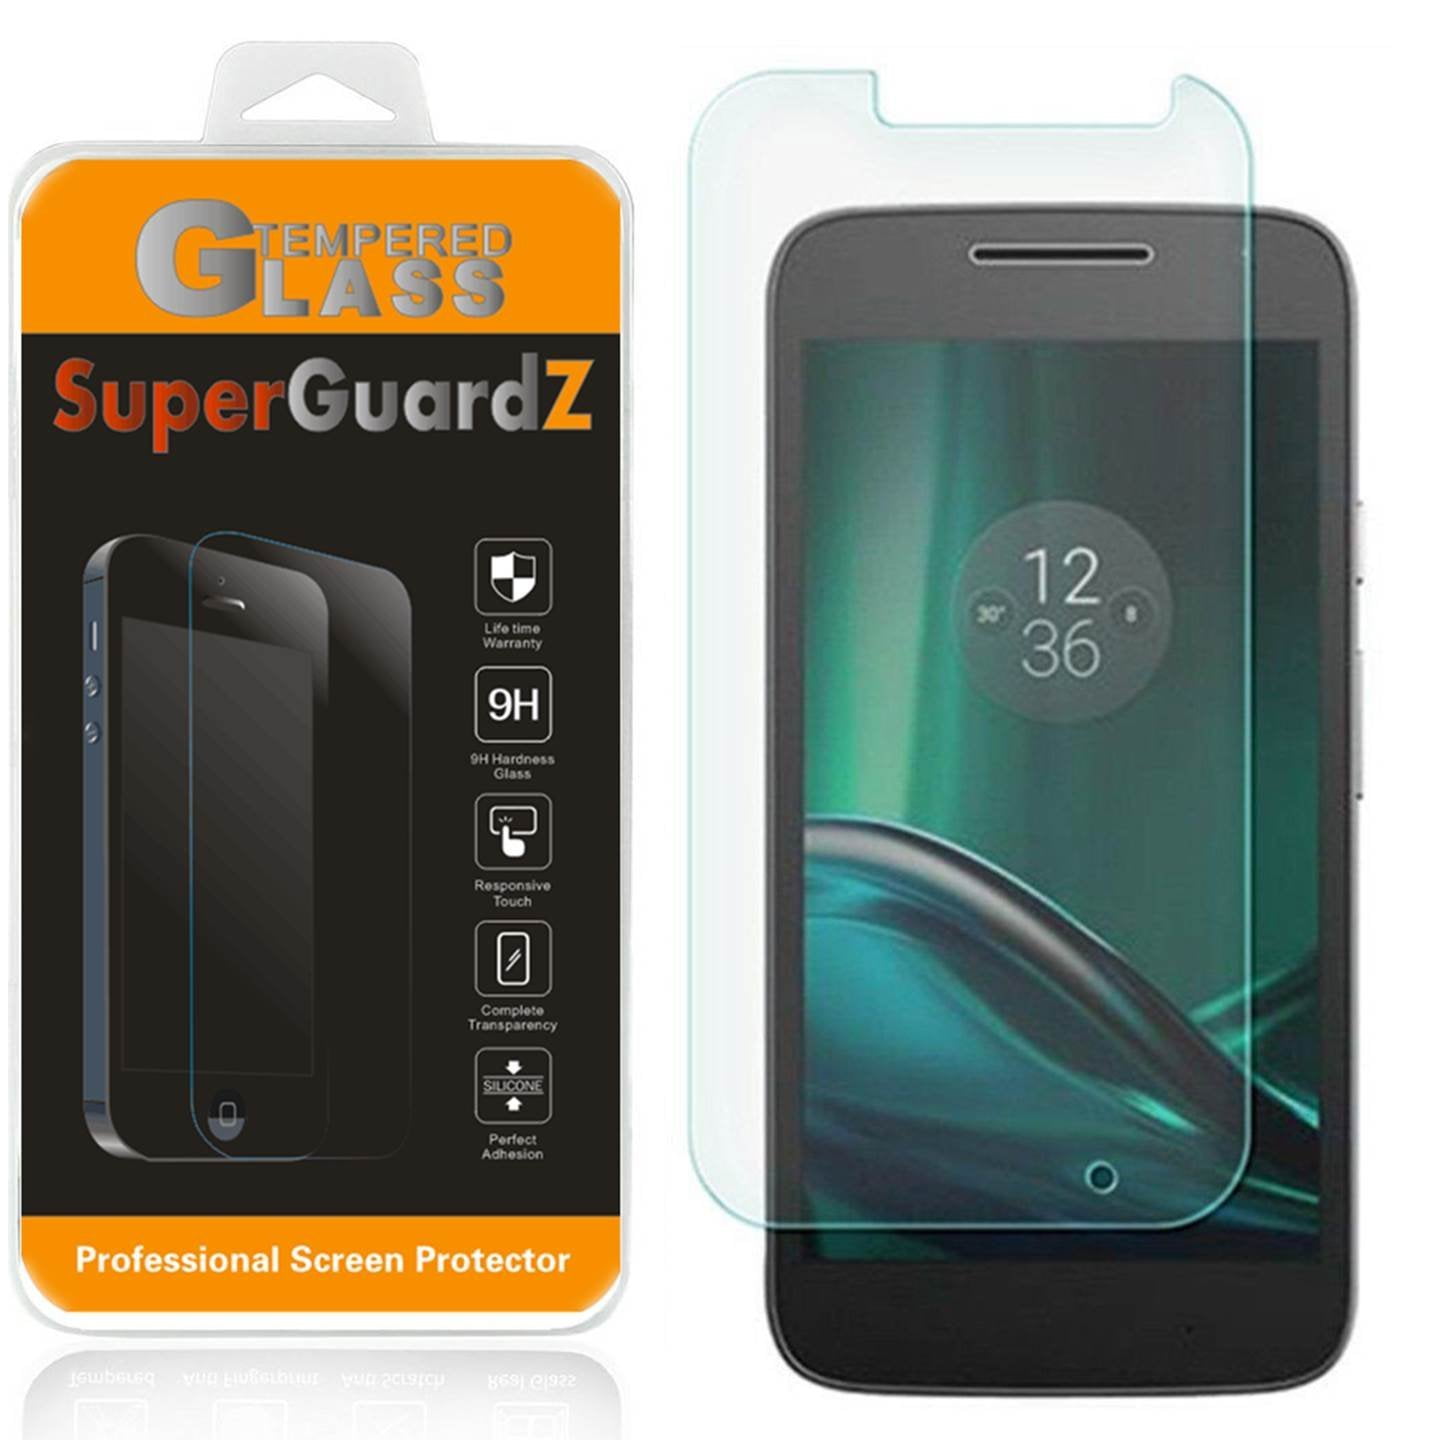 For Motorola Moto G4 Play / Moto G Play Gen) - SuperGuardZ Tempered Glass Screen Protector, Anti-Bubble, Anti-Fingerprint - Walmart.com